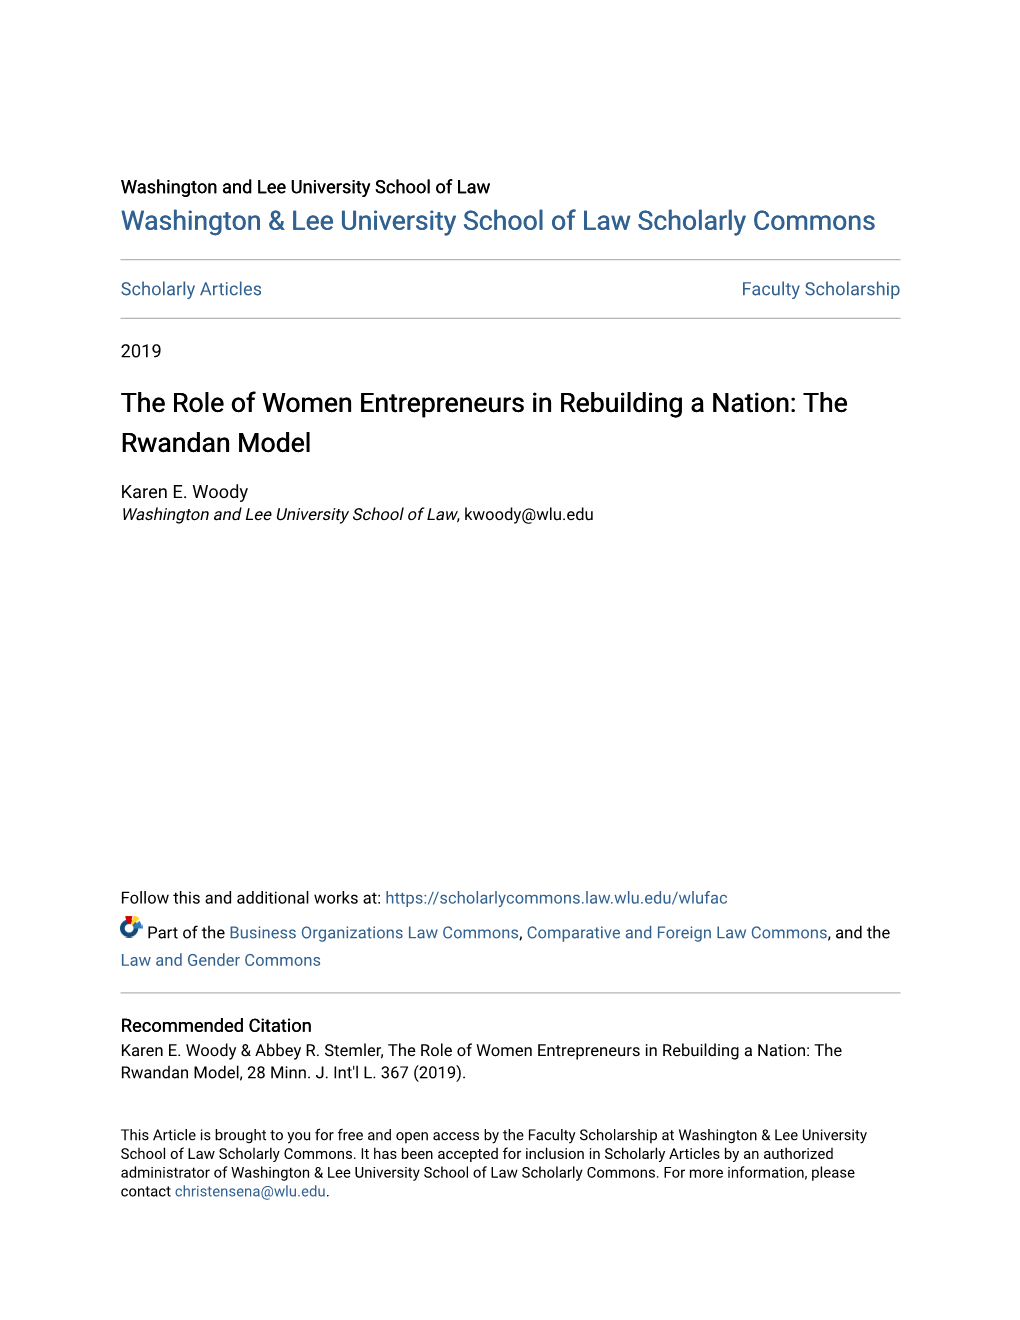 The Role of Women Entrepreneurs in Rebuilding a Nation: the Rwandan Model